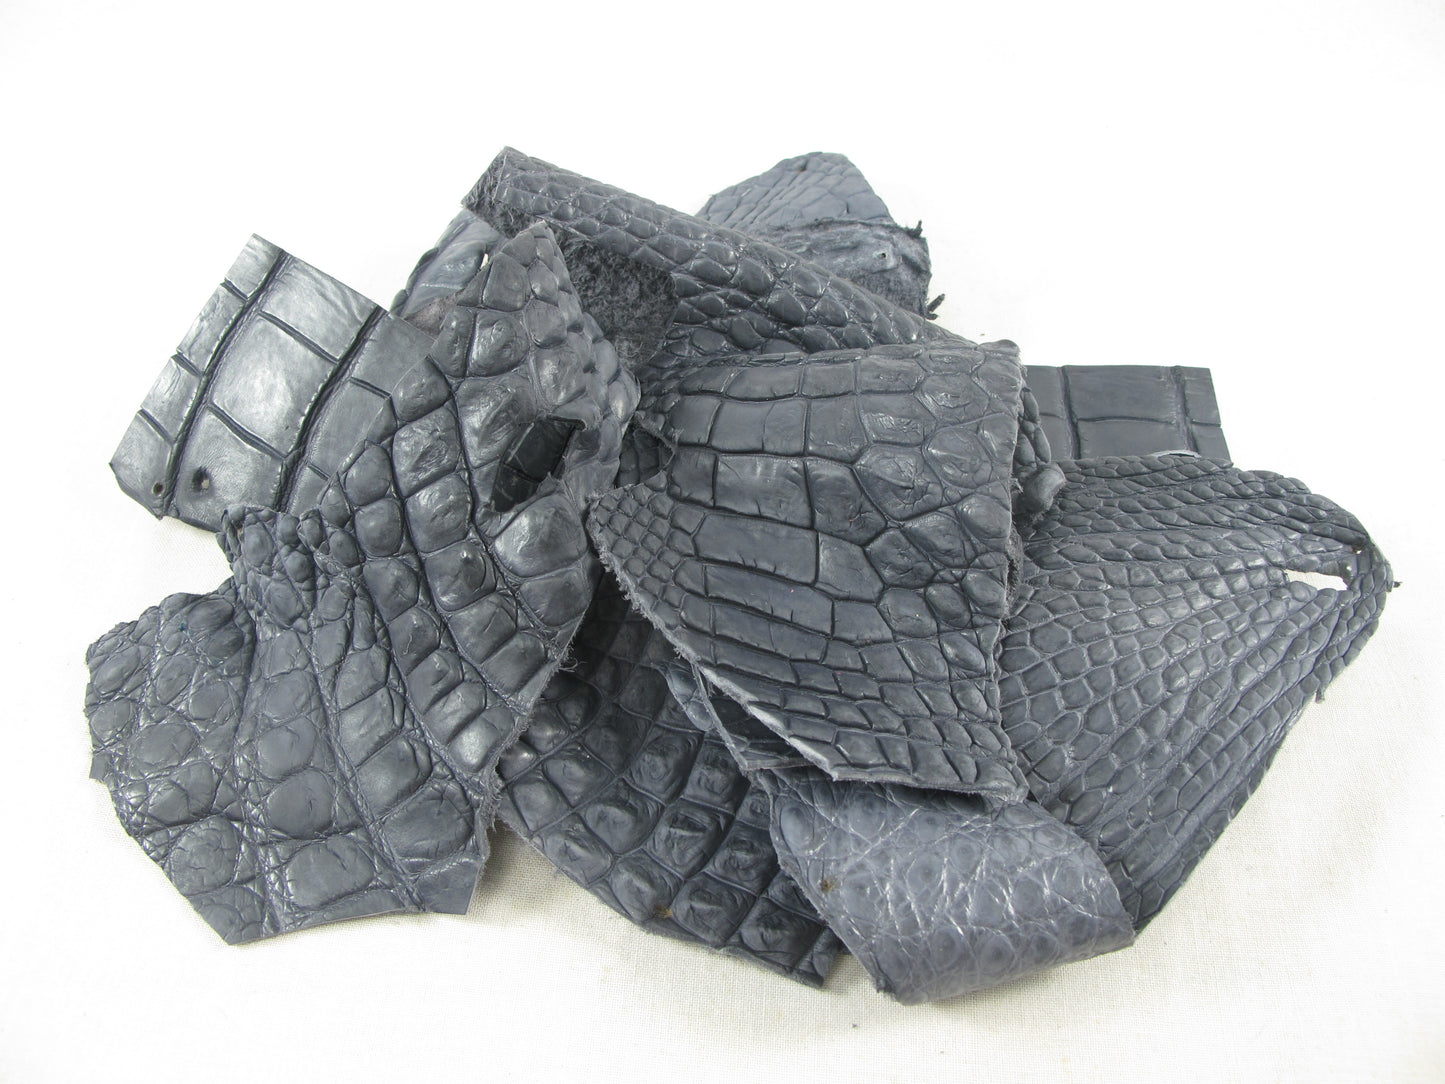 Genuine Crocodile Skin Leather Scraps Hide Pelt 100 grams